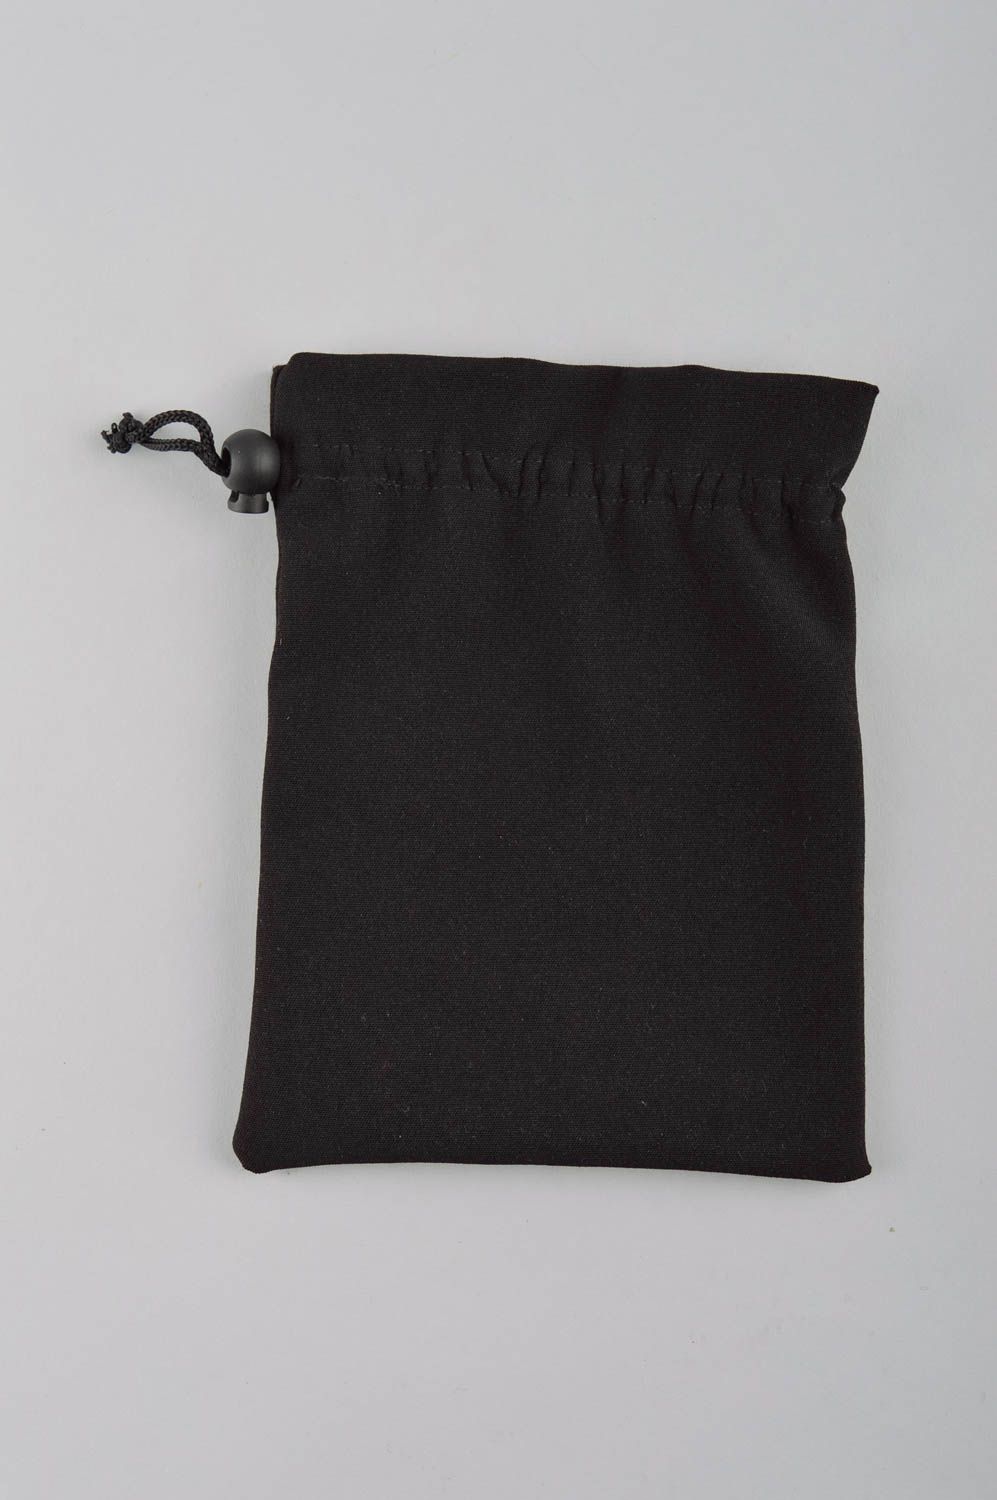 Unusual handmade fabric pouch handmade accessories fabric purse for girls photo 3